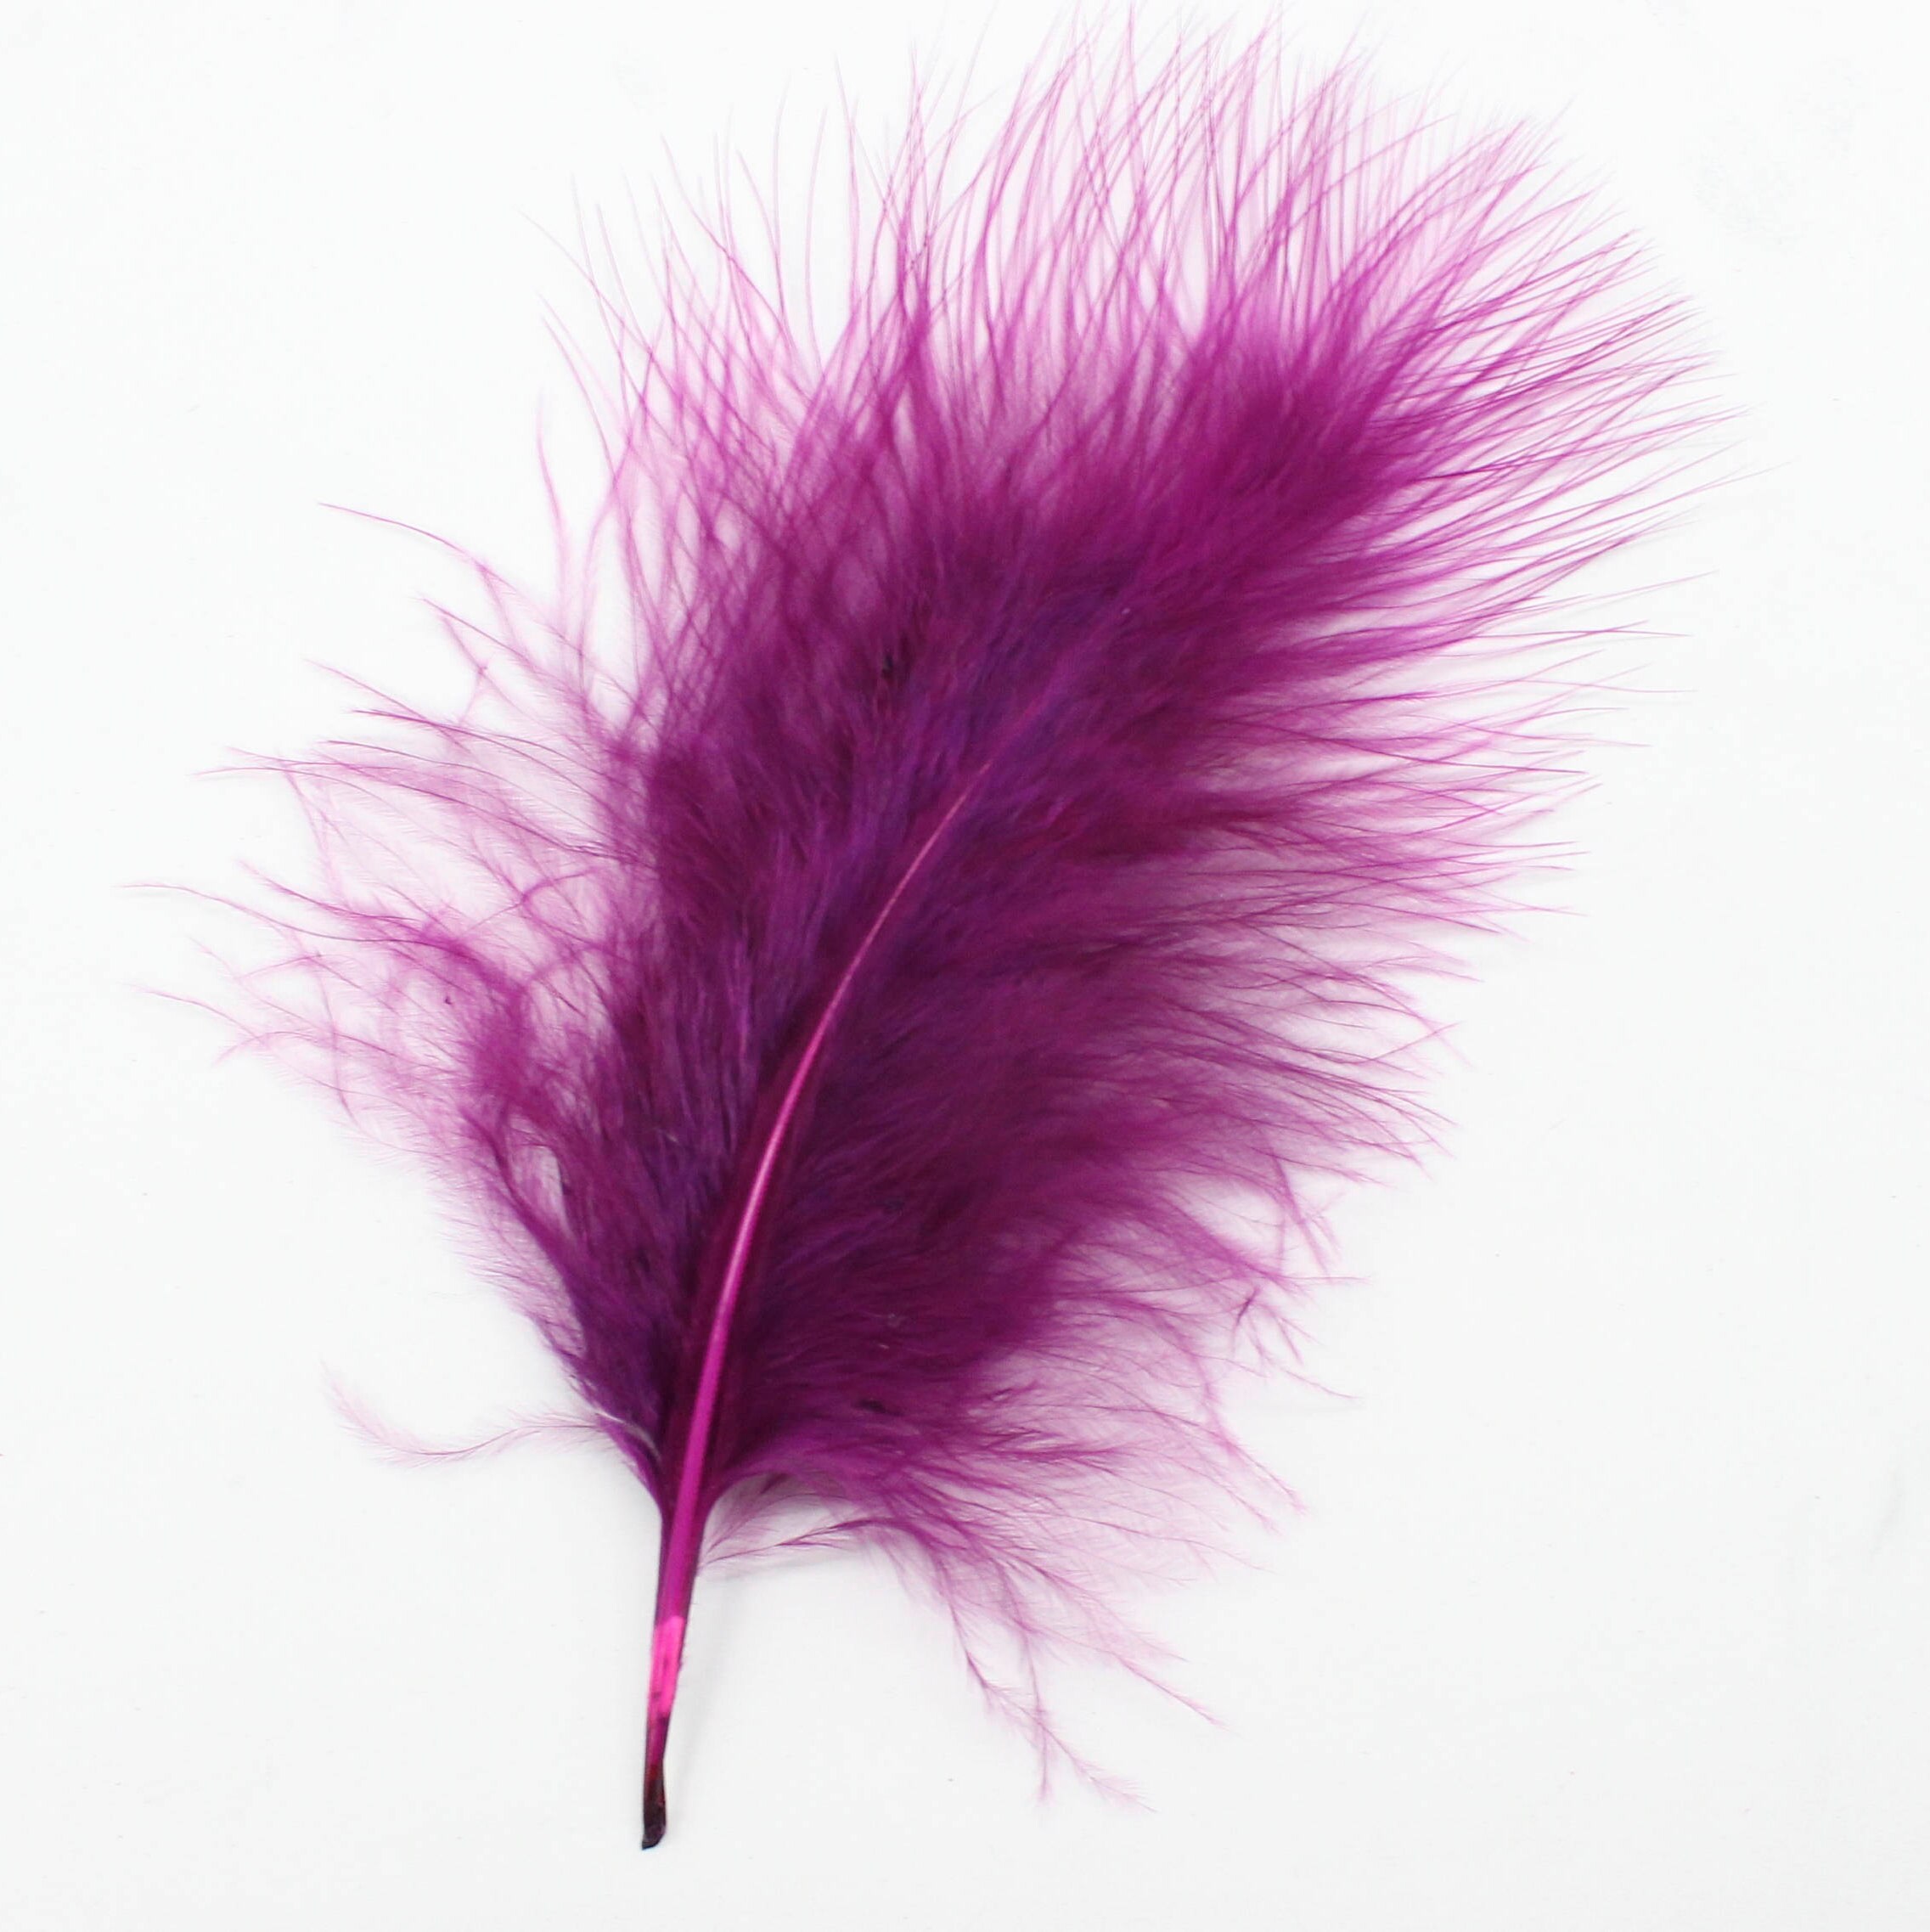 30 Pcs MARABOU PLUMAGE Feathers 2-5 Color : PLUM for | Etsy